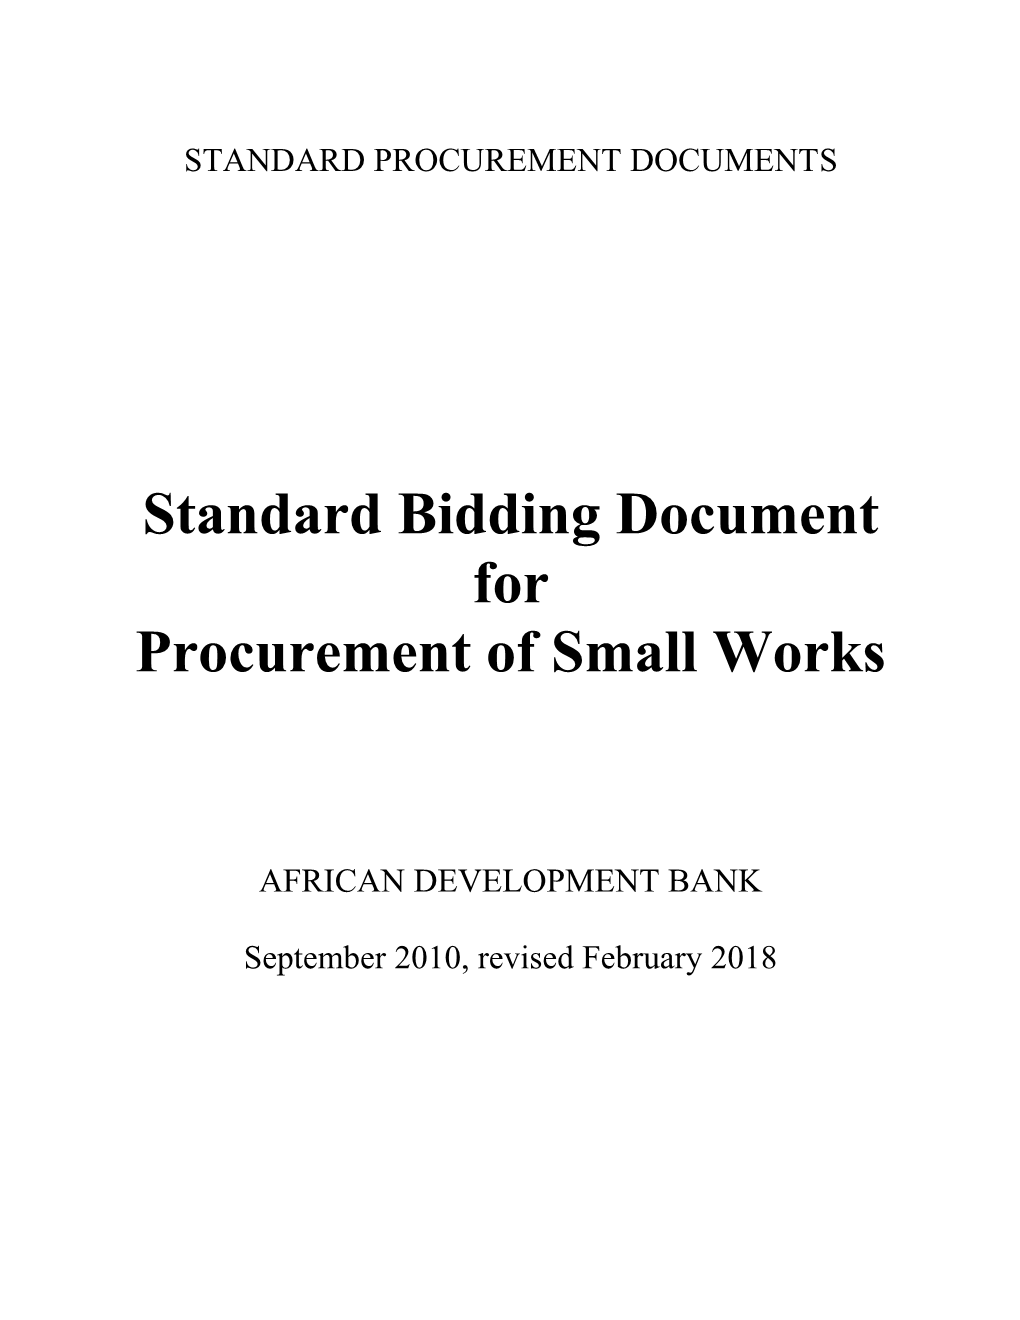 Standard Bidding Document for Procurement of Small Works - September 2010, Revised July 2012